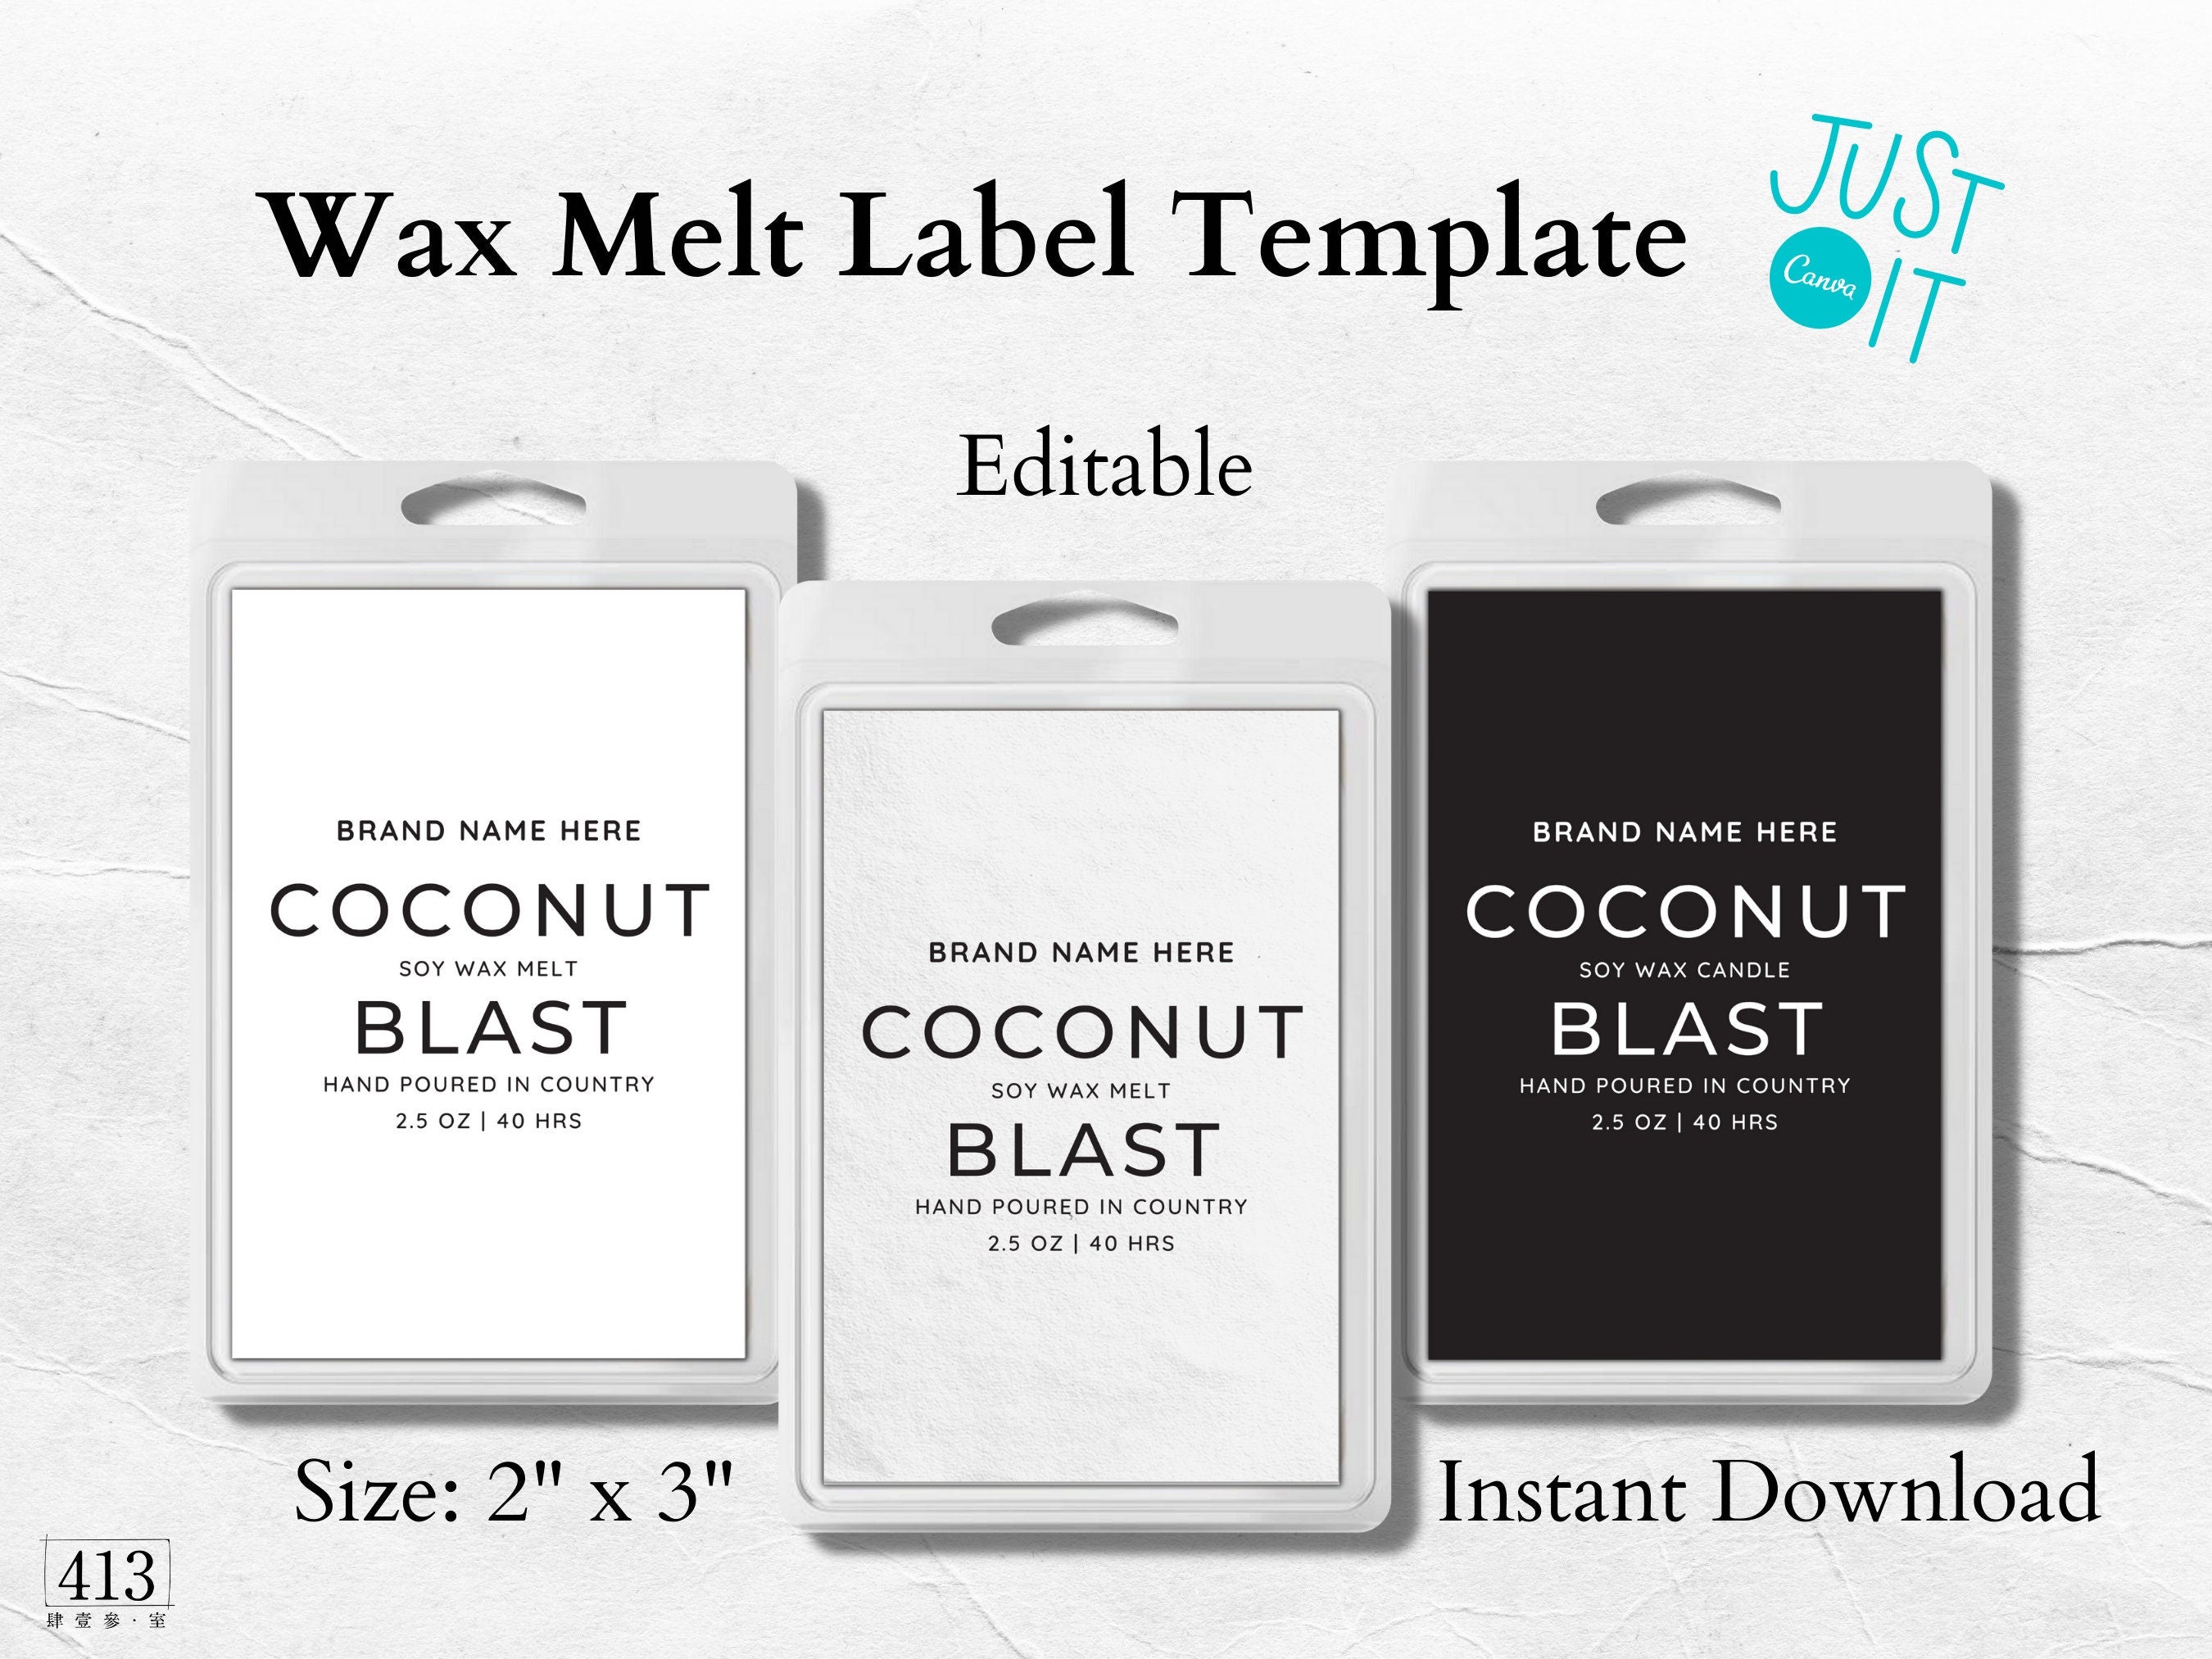 Wax Melt Labels - Blank or Custom Printed